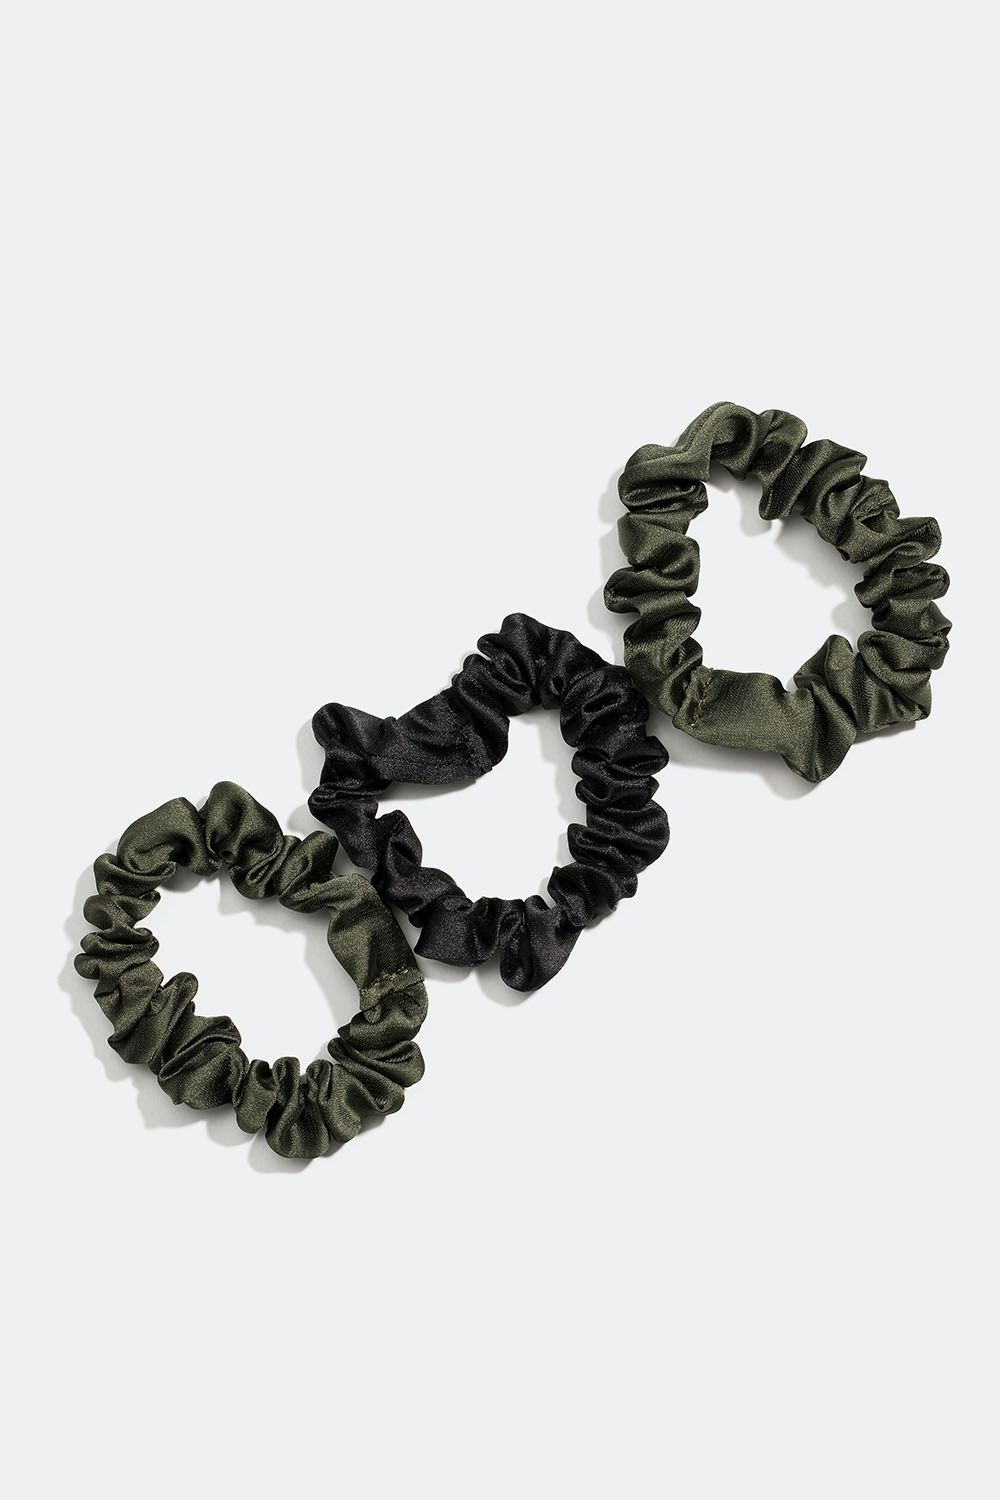 Grön och svart mix av glansiga scrunchies, 3-pack i gruppen Håraccessoarer / Scrunchies / Flerpack hos Glitter (332000677700)